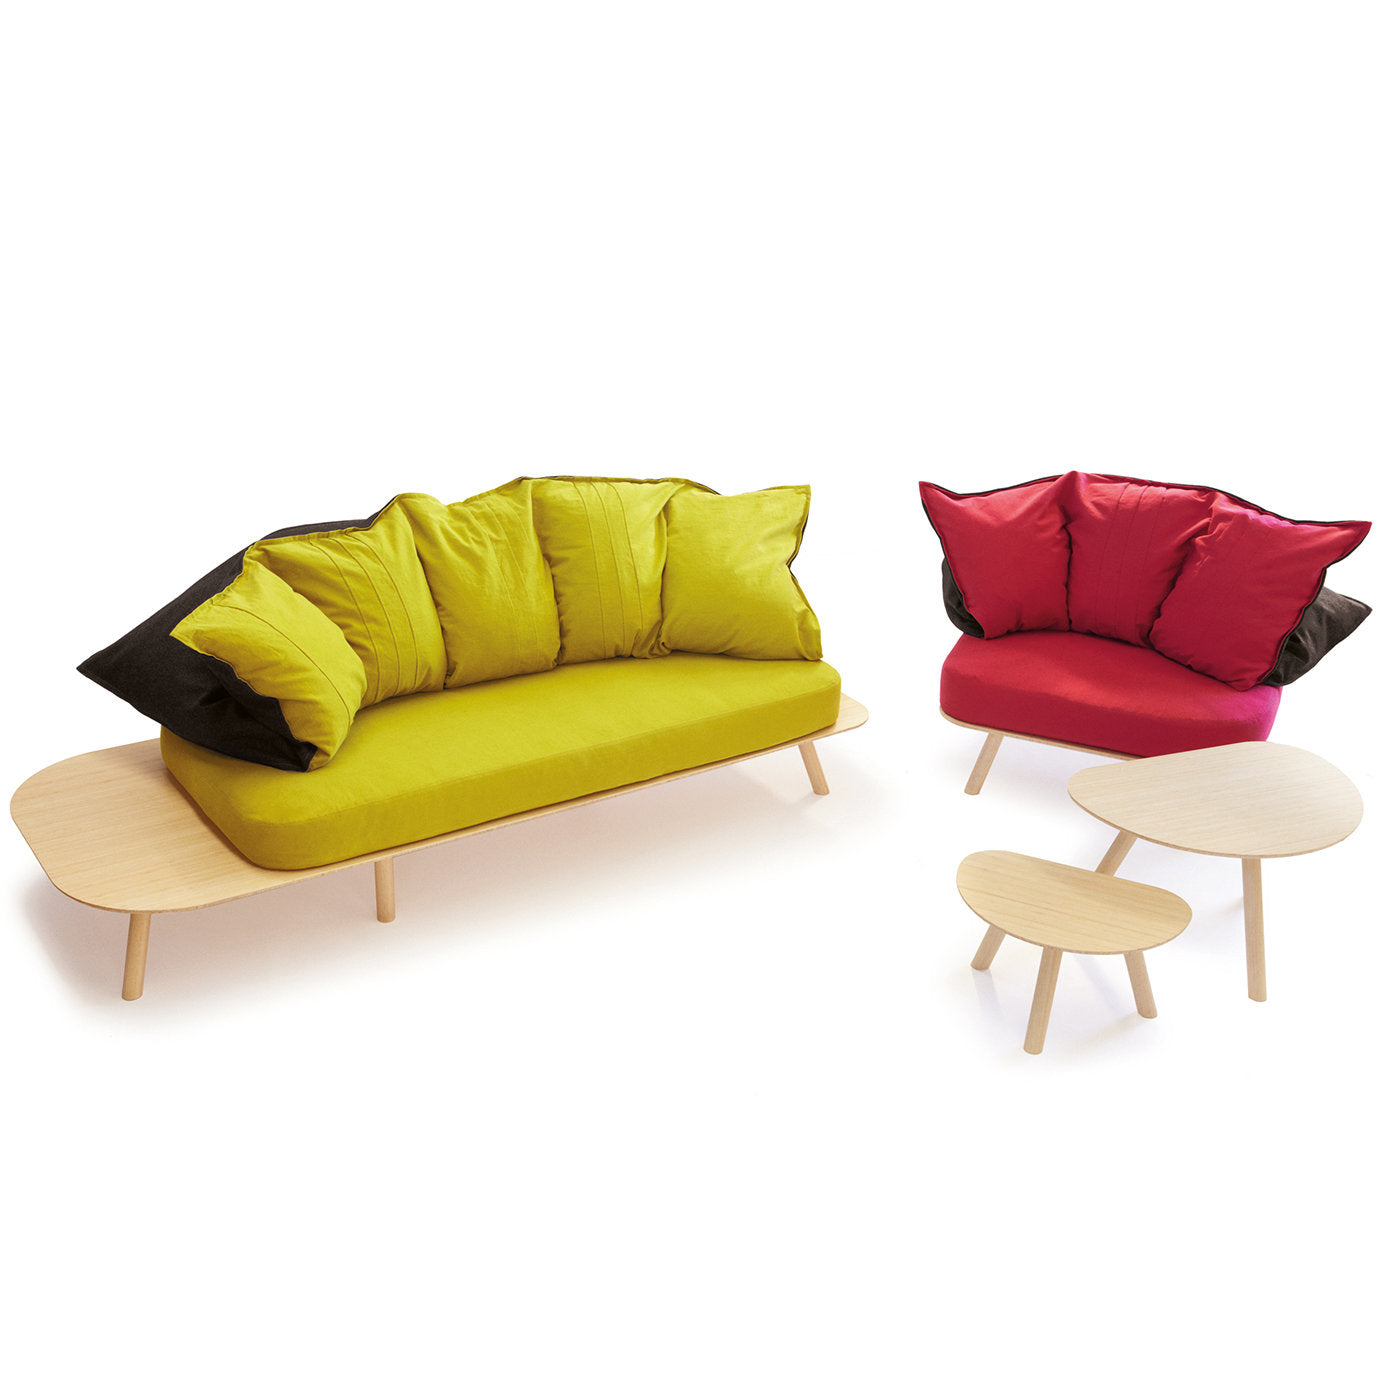 Disfatto Natural Sofa by Dennis Guidone  - Alternative view 3